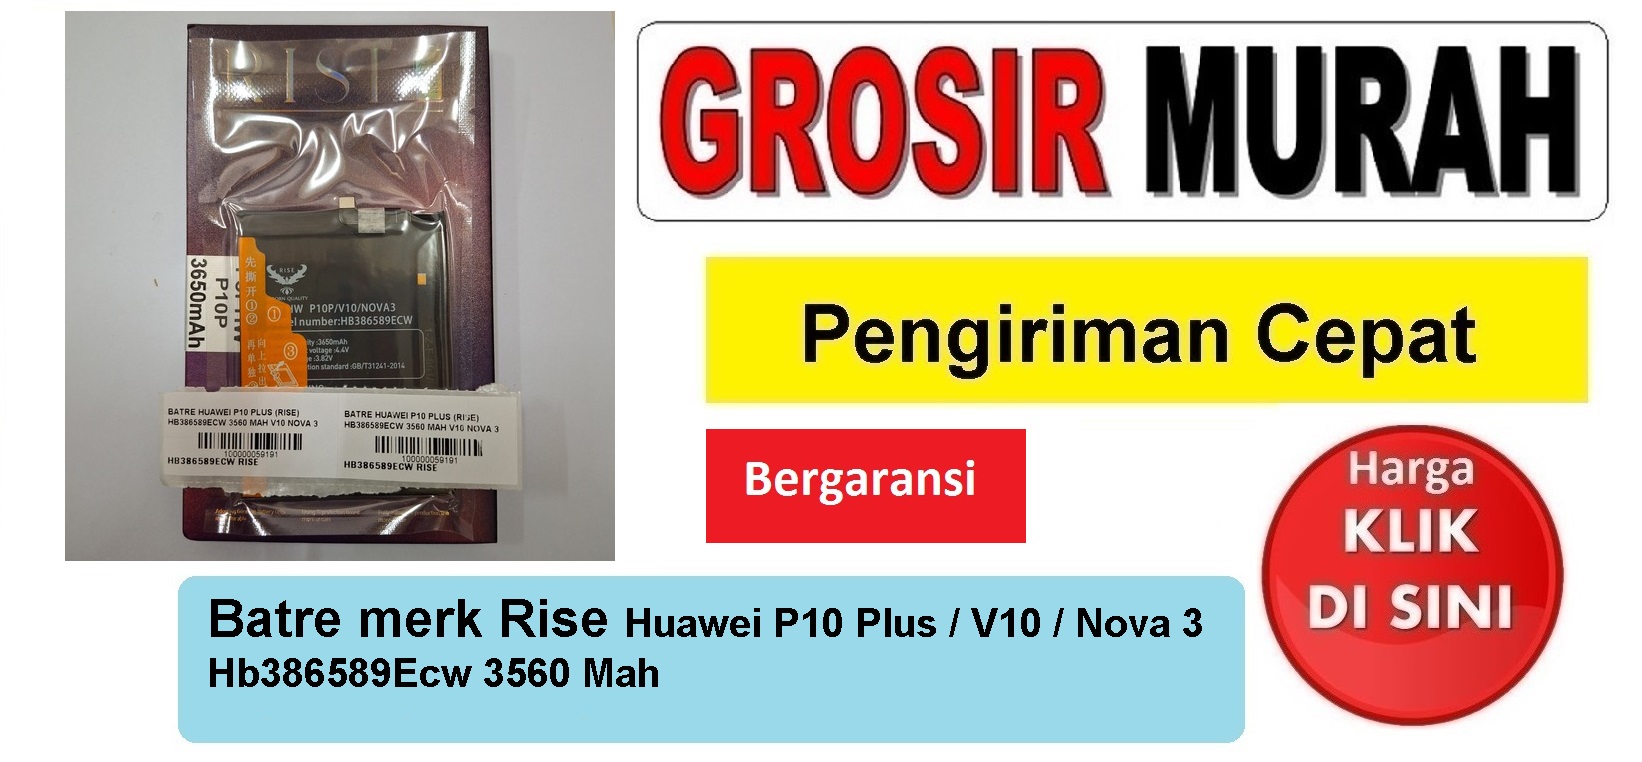 Batre merk Rise Huawei P10 Plus Hb386589Ecw 3560 Mah V10 Nova 3 Baterai Battery Bergaransi Batere